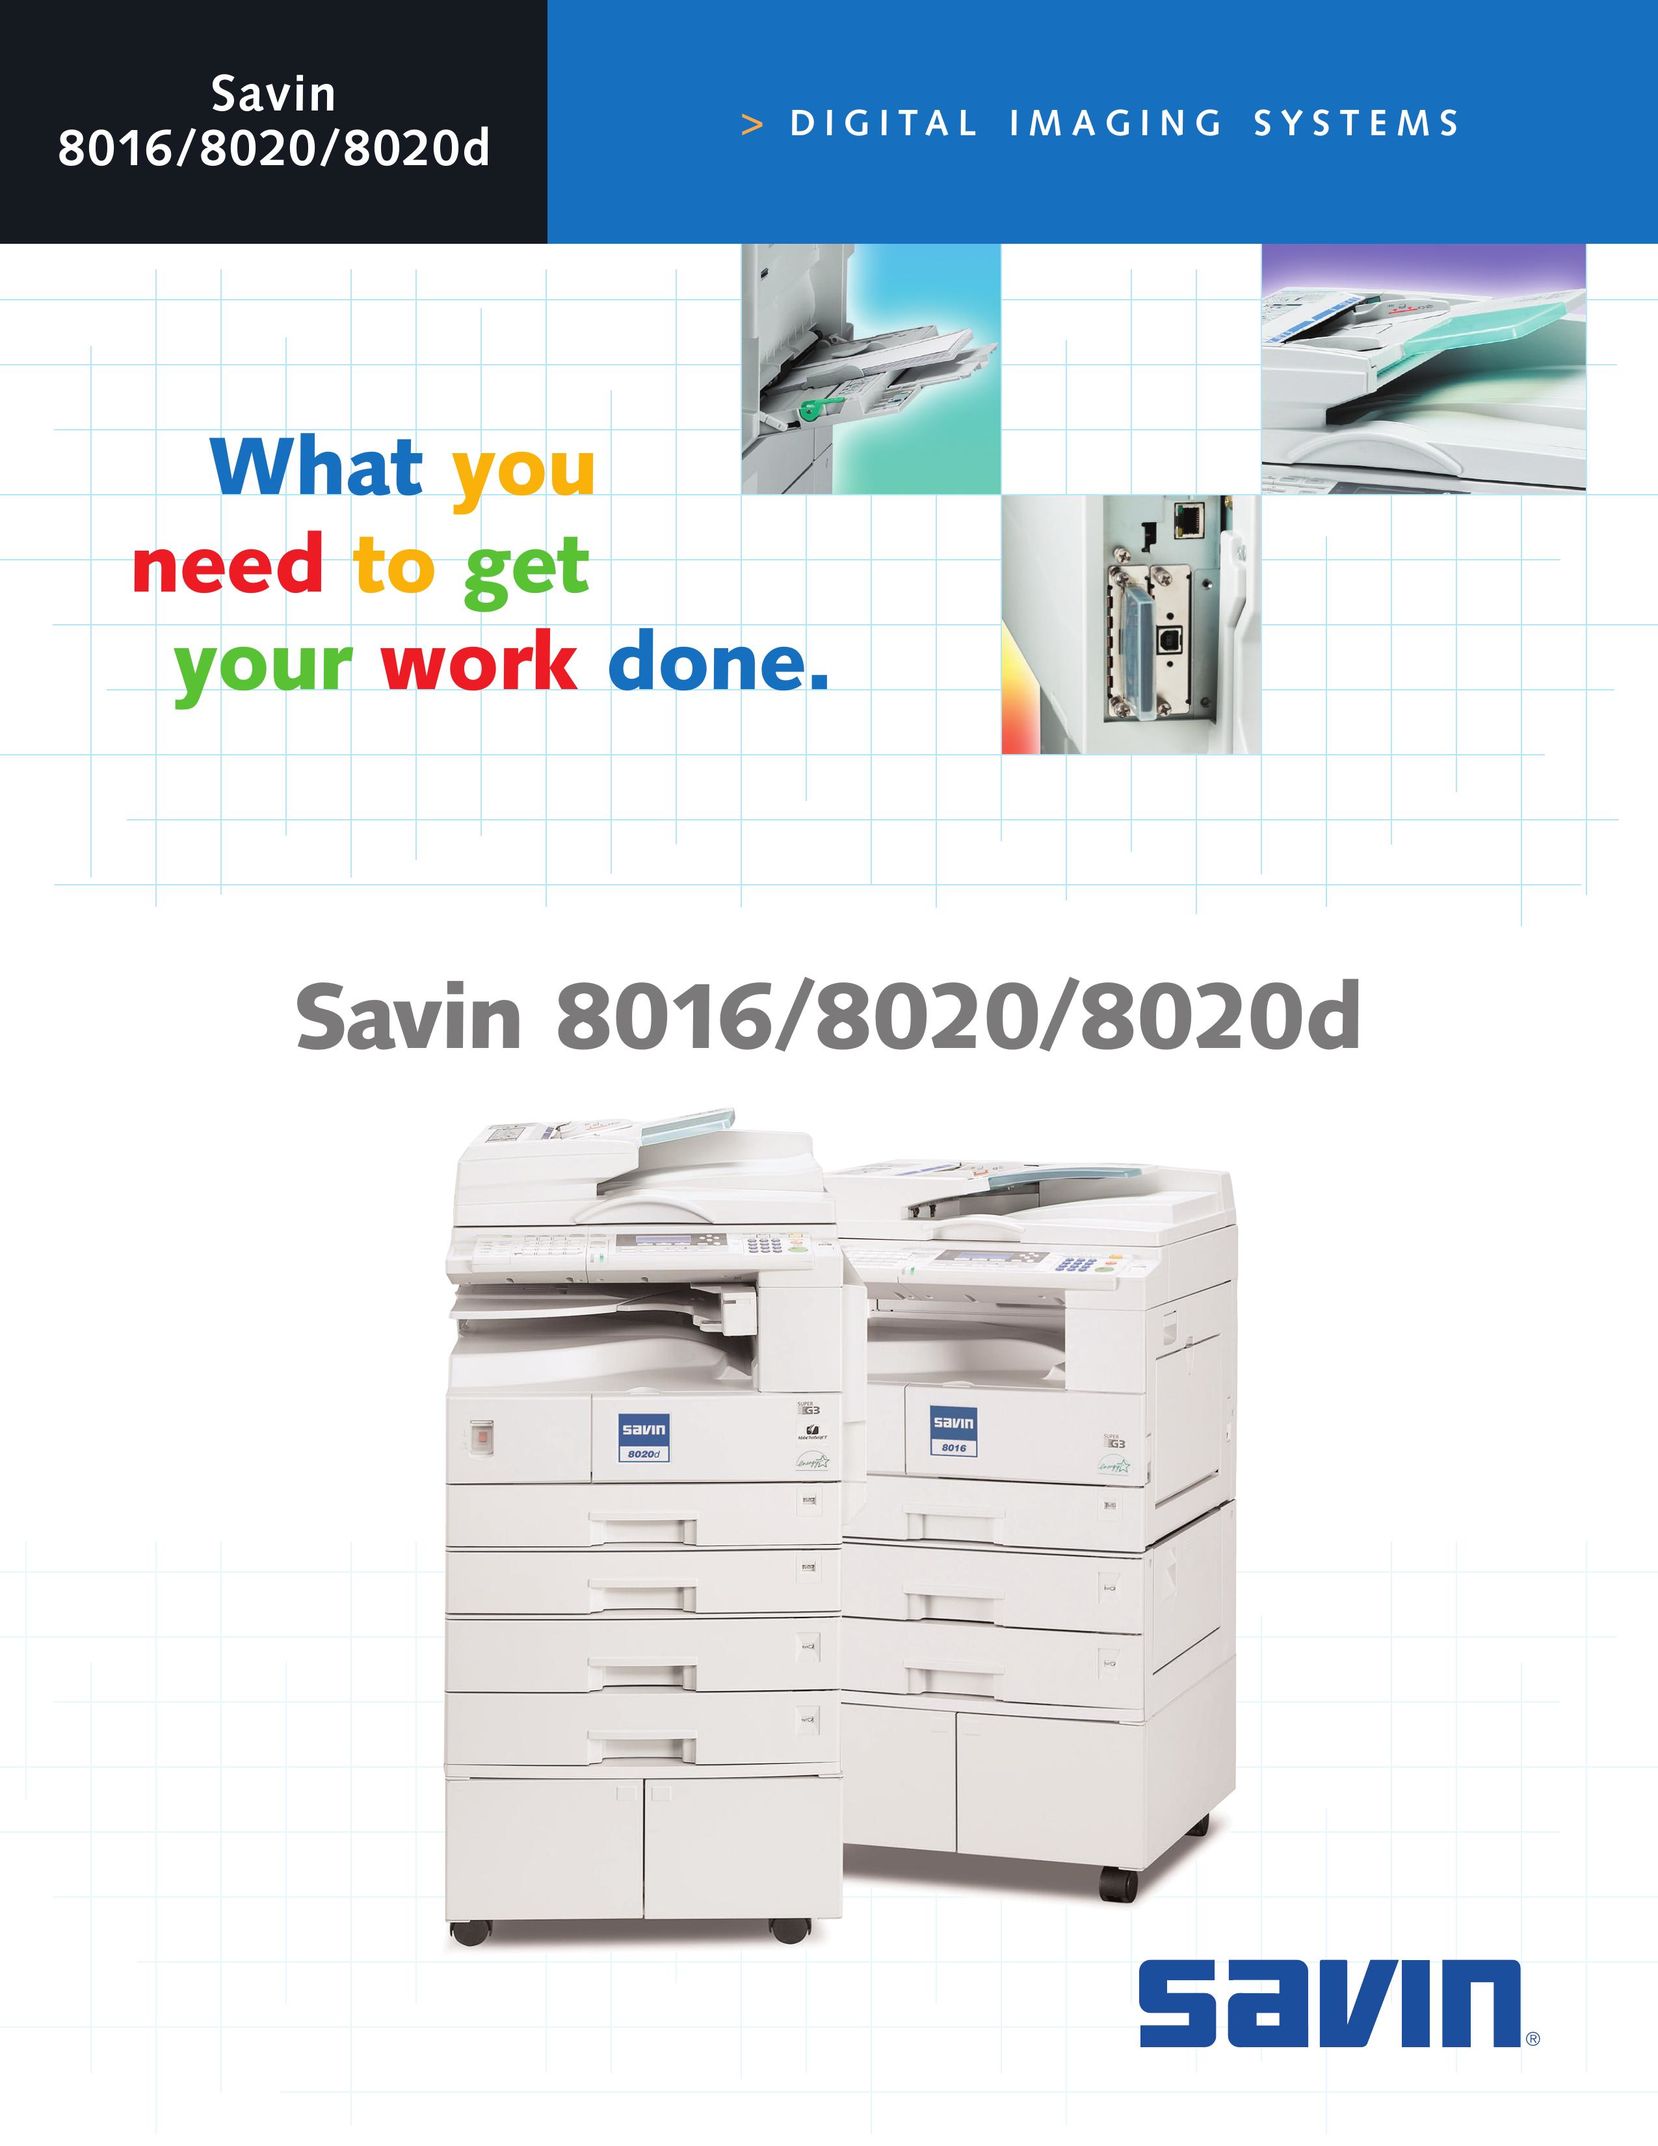 Savin 8020d All in One Printer User Manual